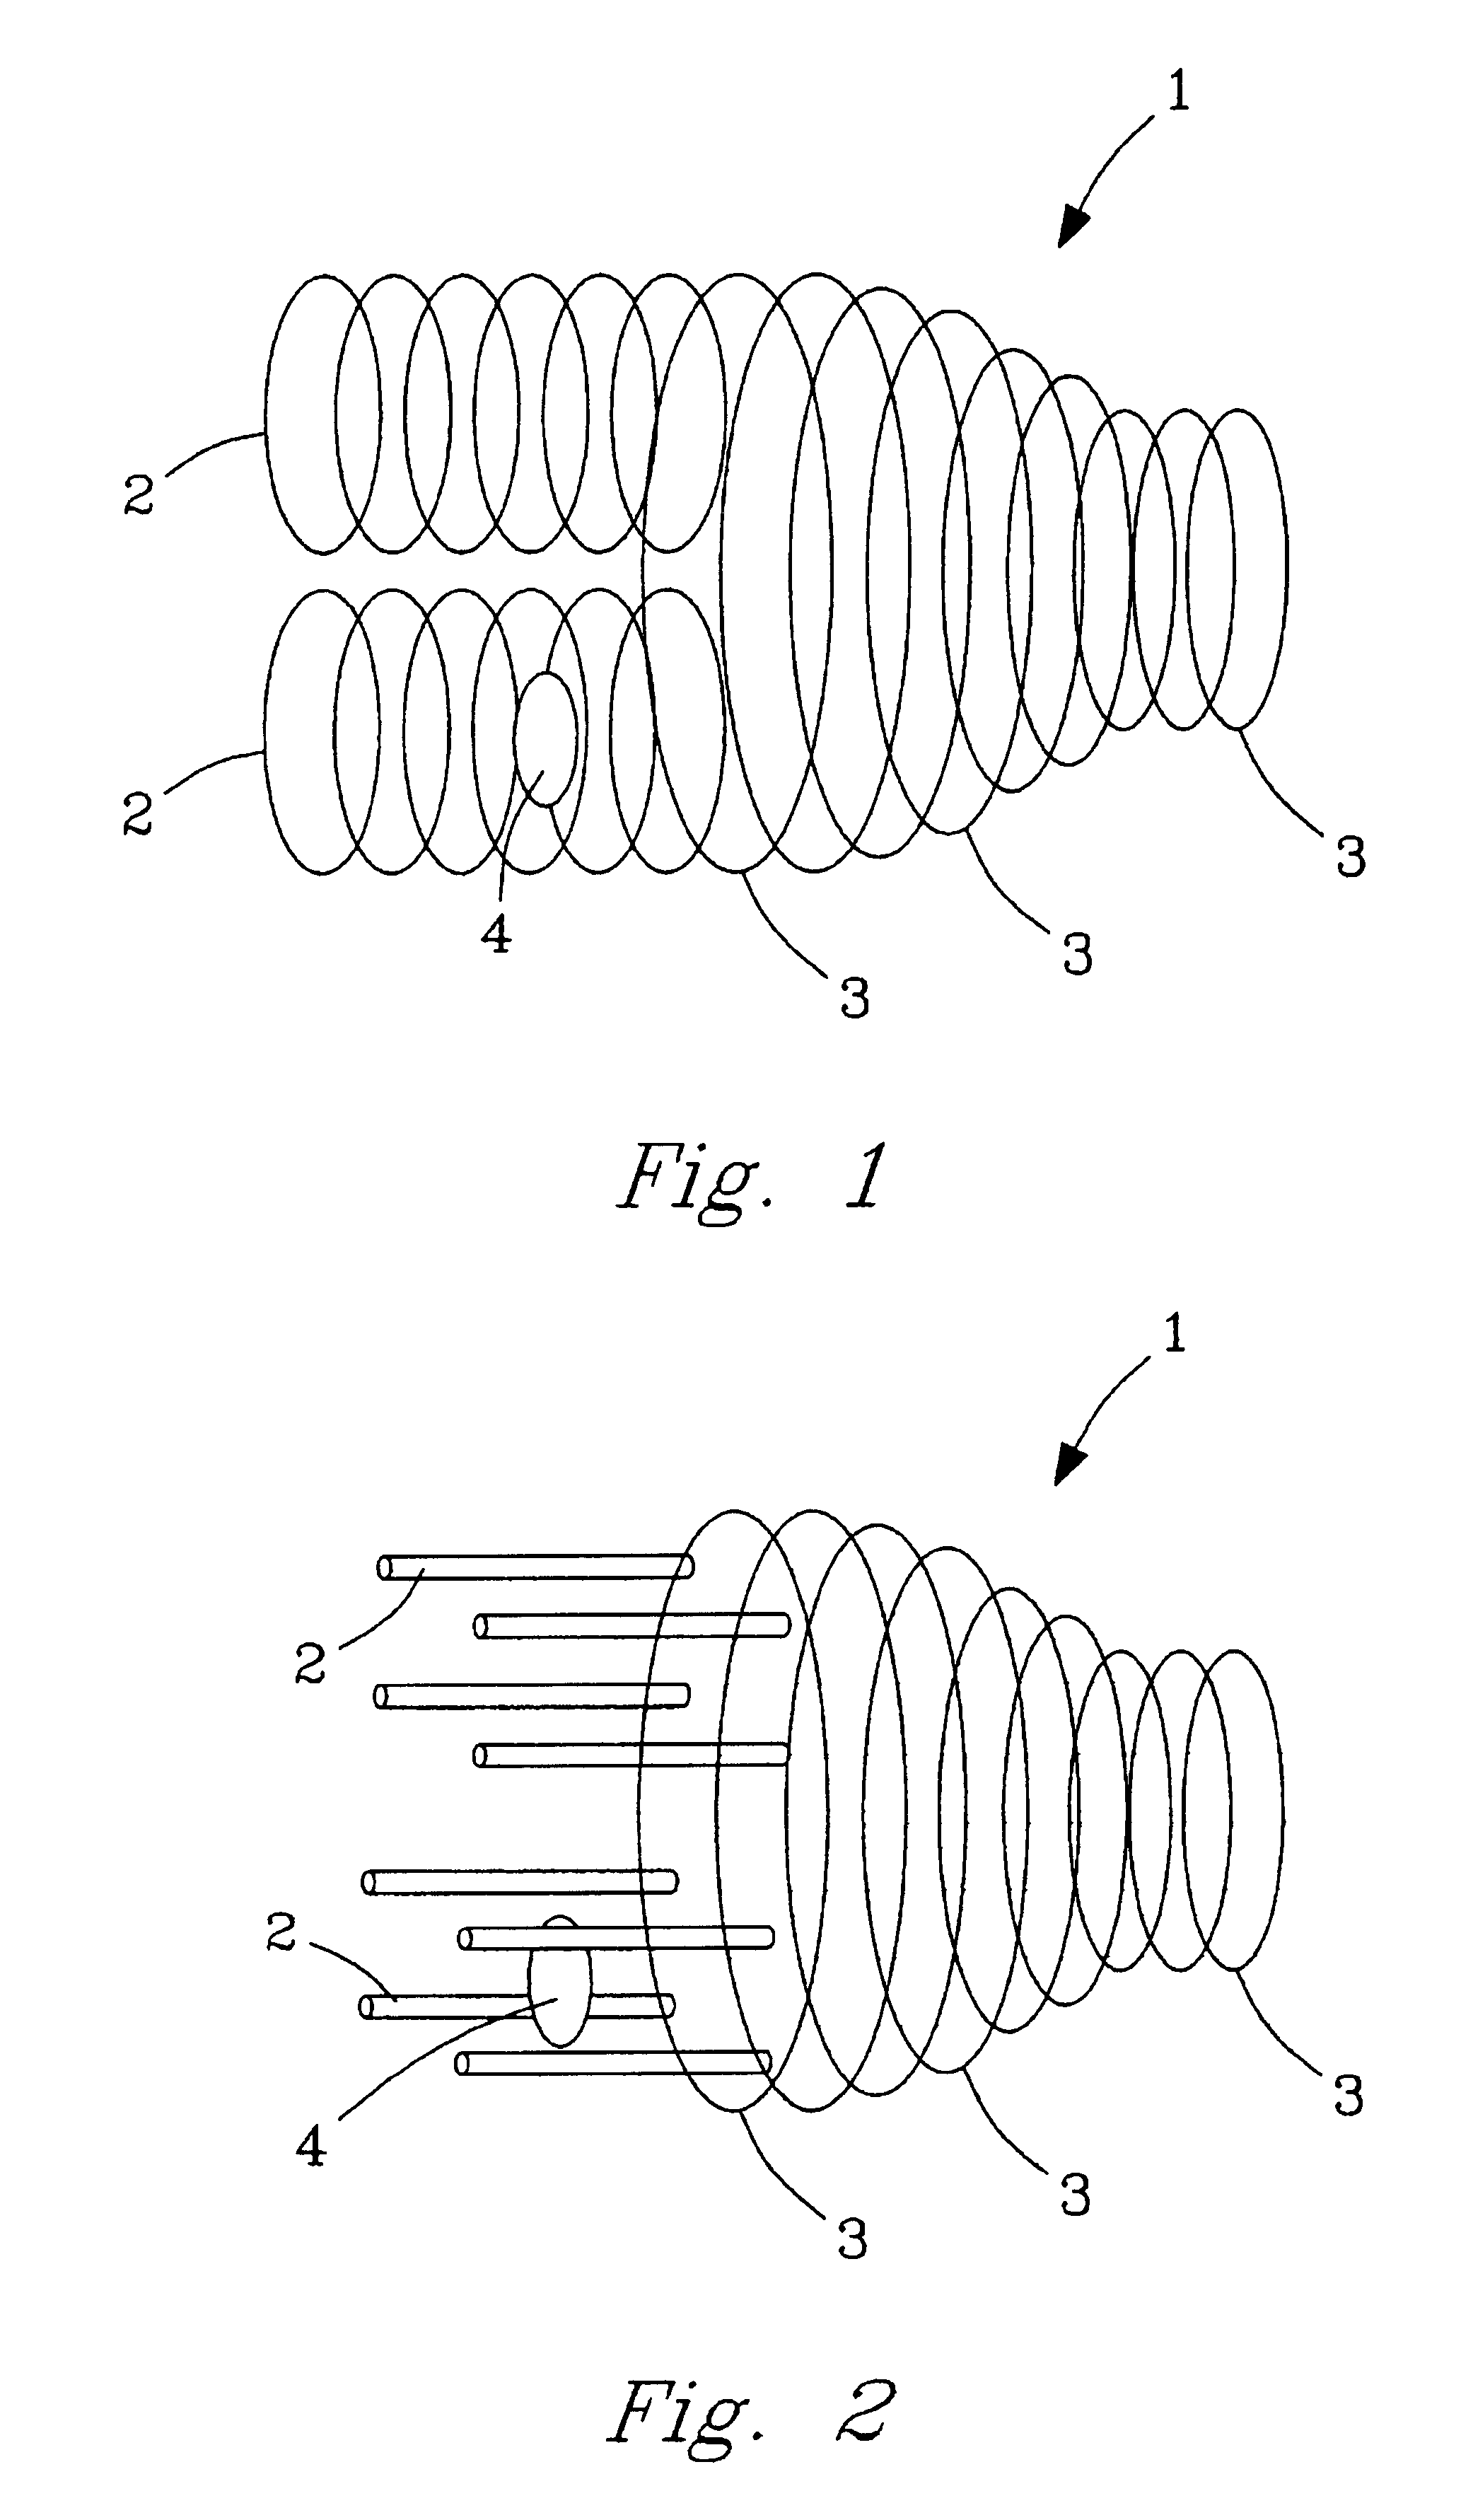 Multi-source ion funnel